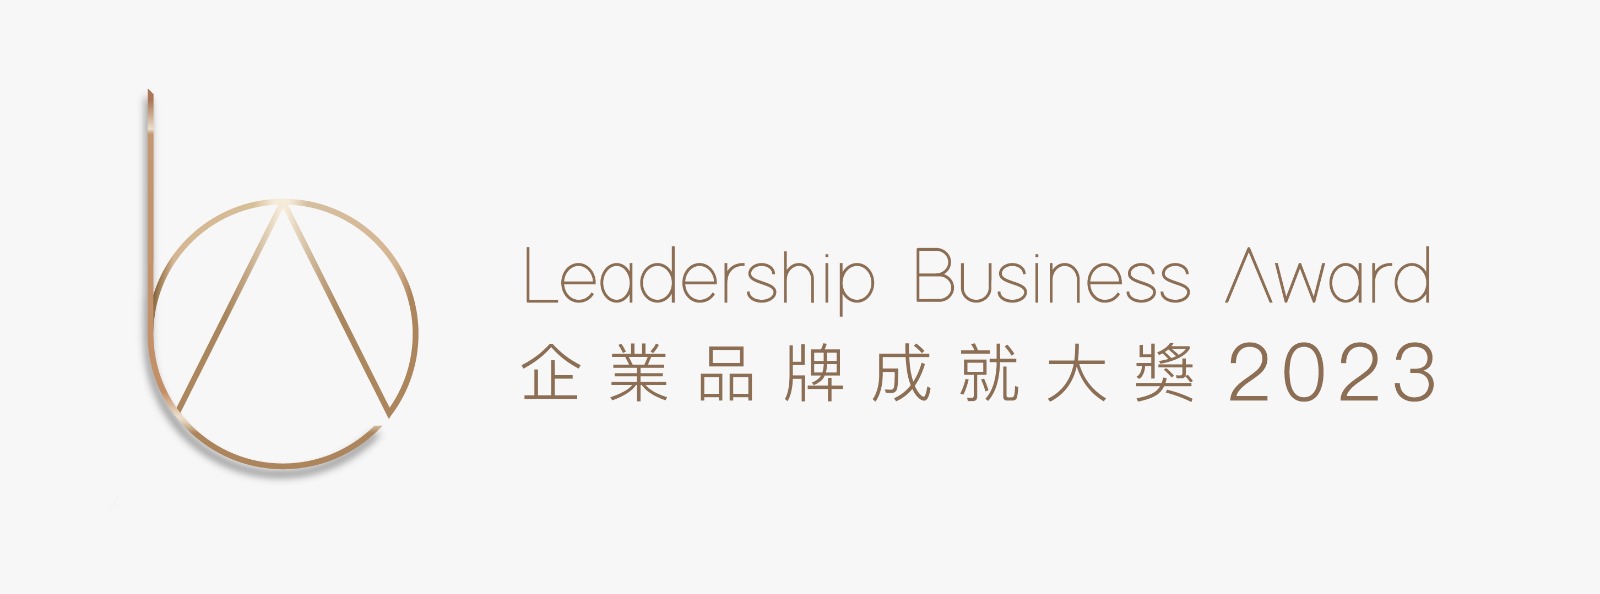 NowTV Leadership Business Award 2023